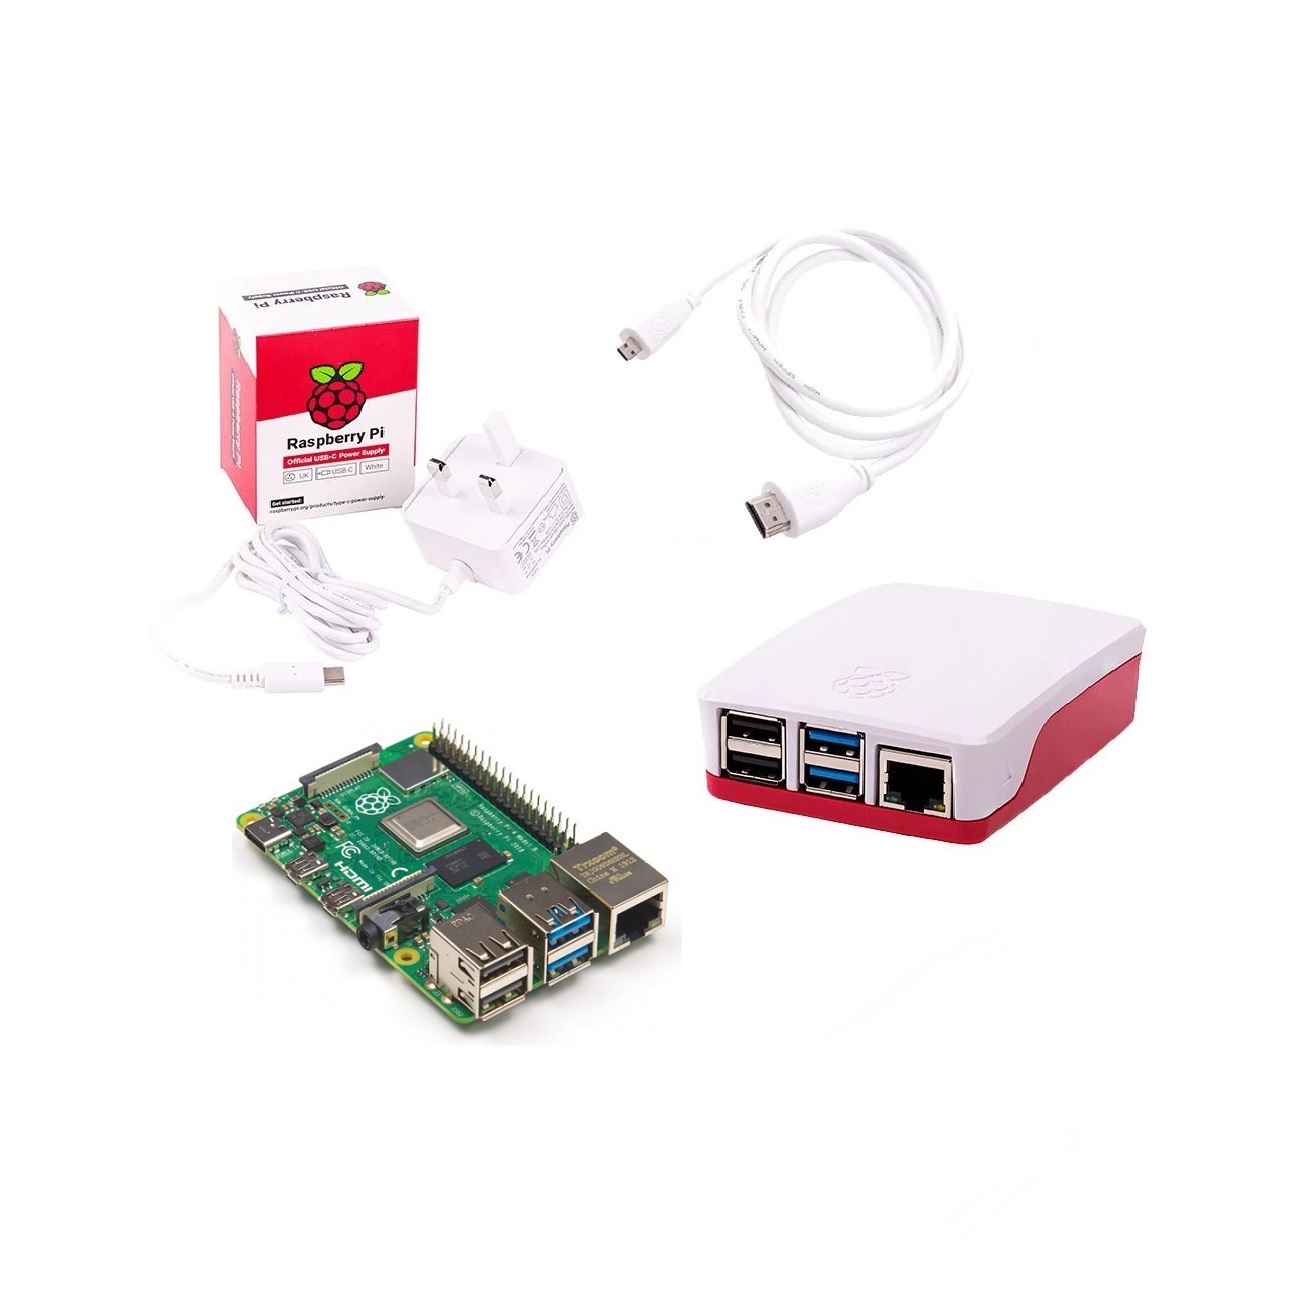 Buy Raspberry Pi 4 4GB Starter Kit Online at Lowest Price